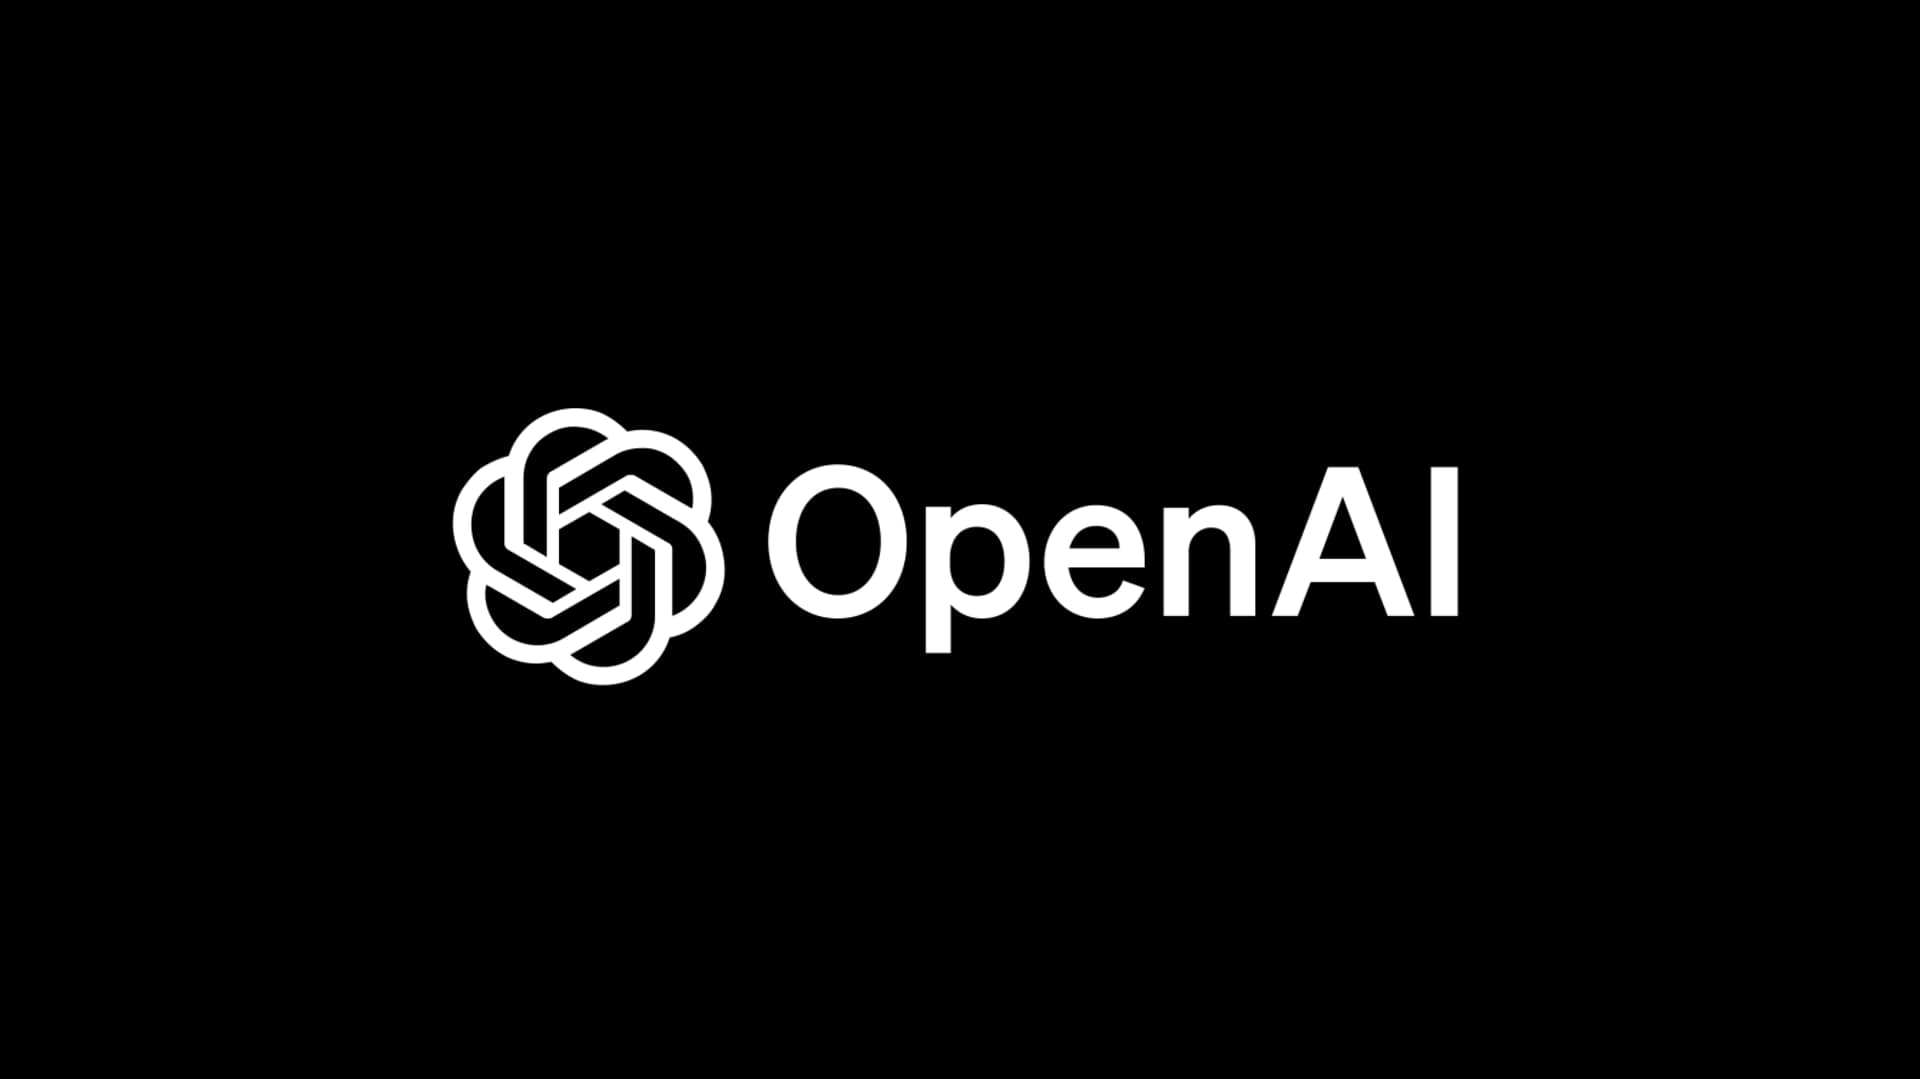 OpenAI eyes $80-90bn valuation as investors bet on AI future